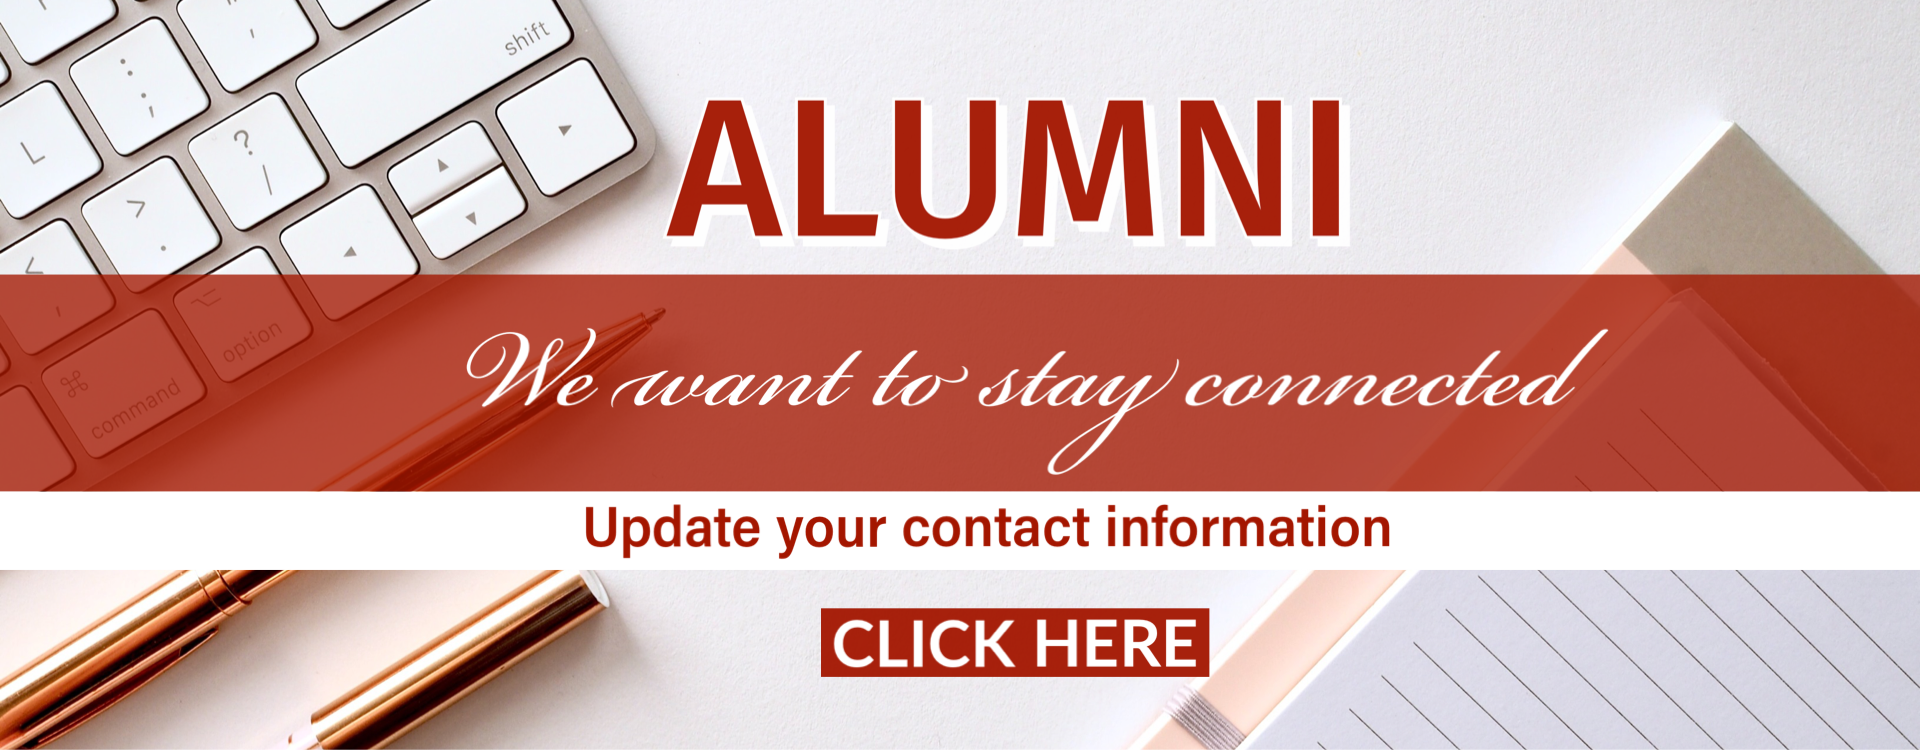 Alumni Contact Update